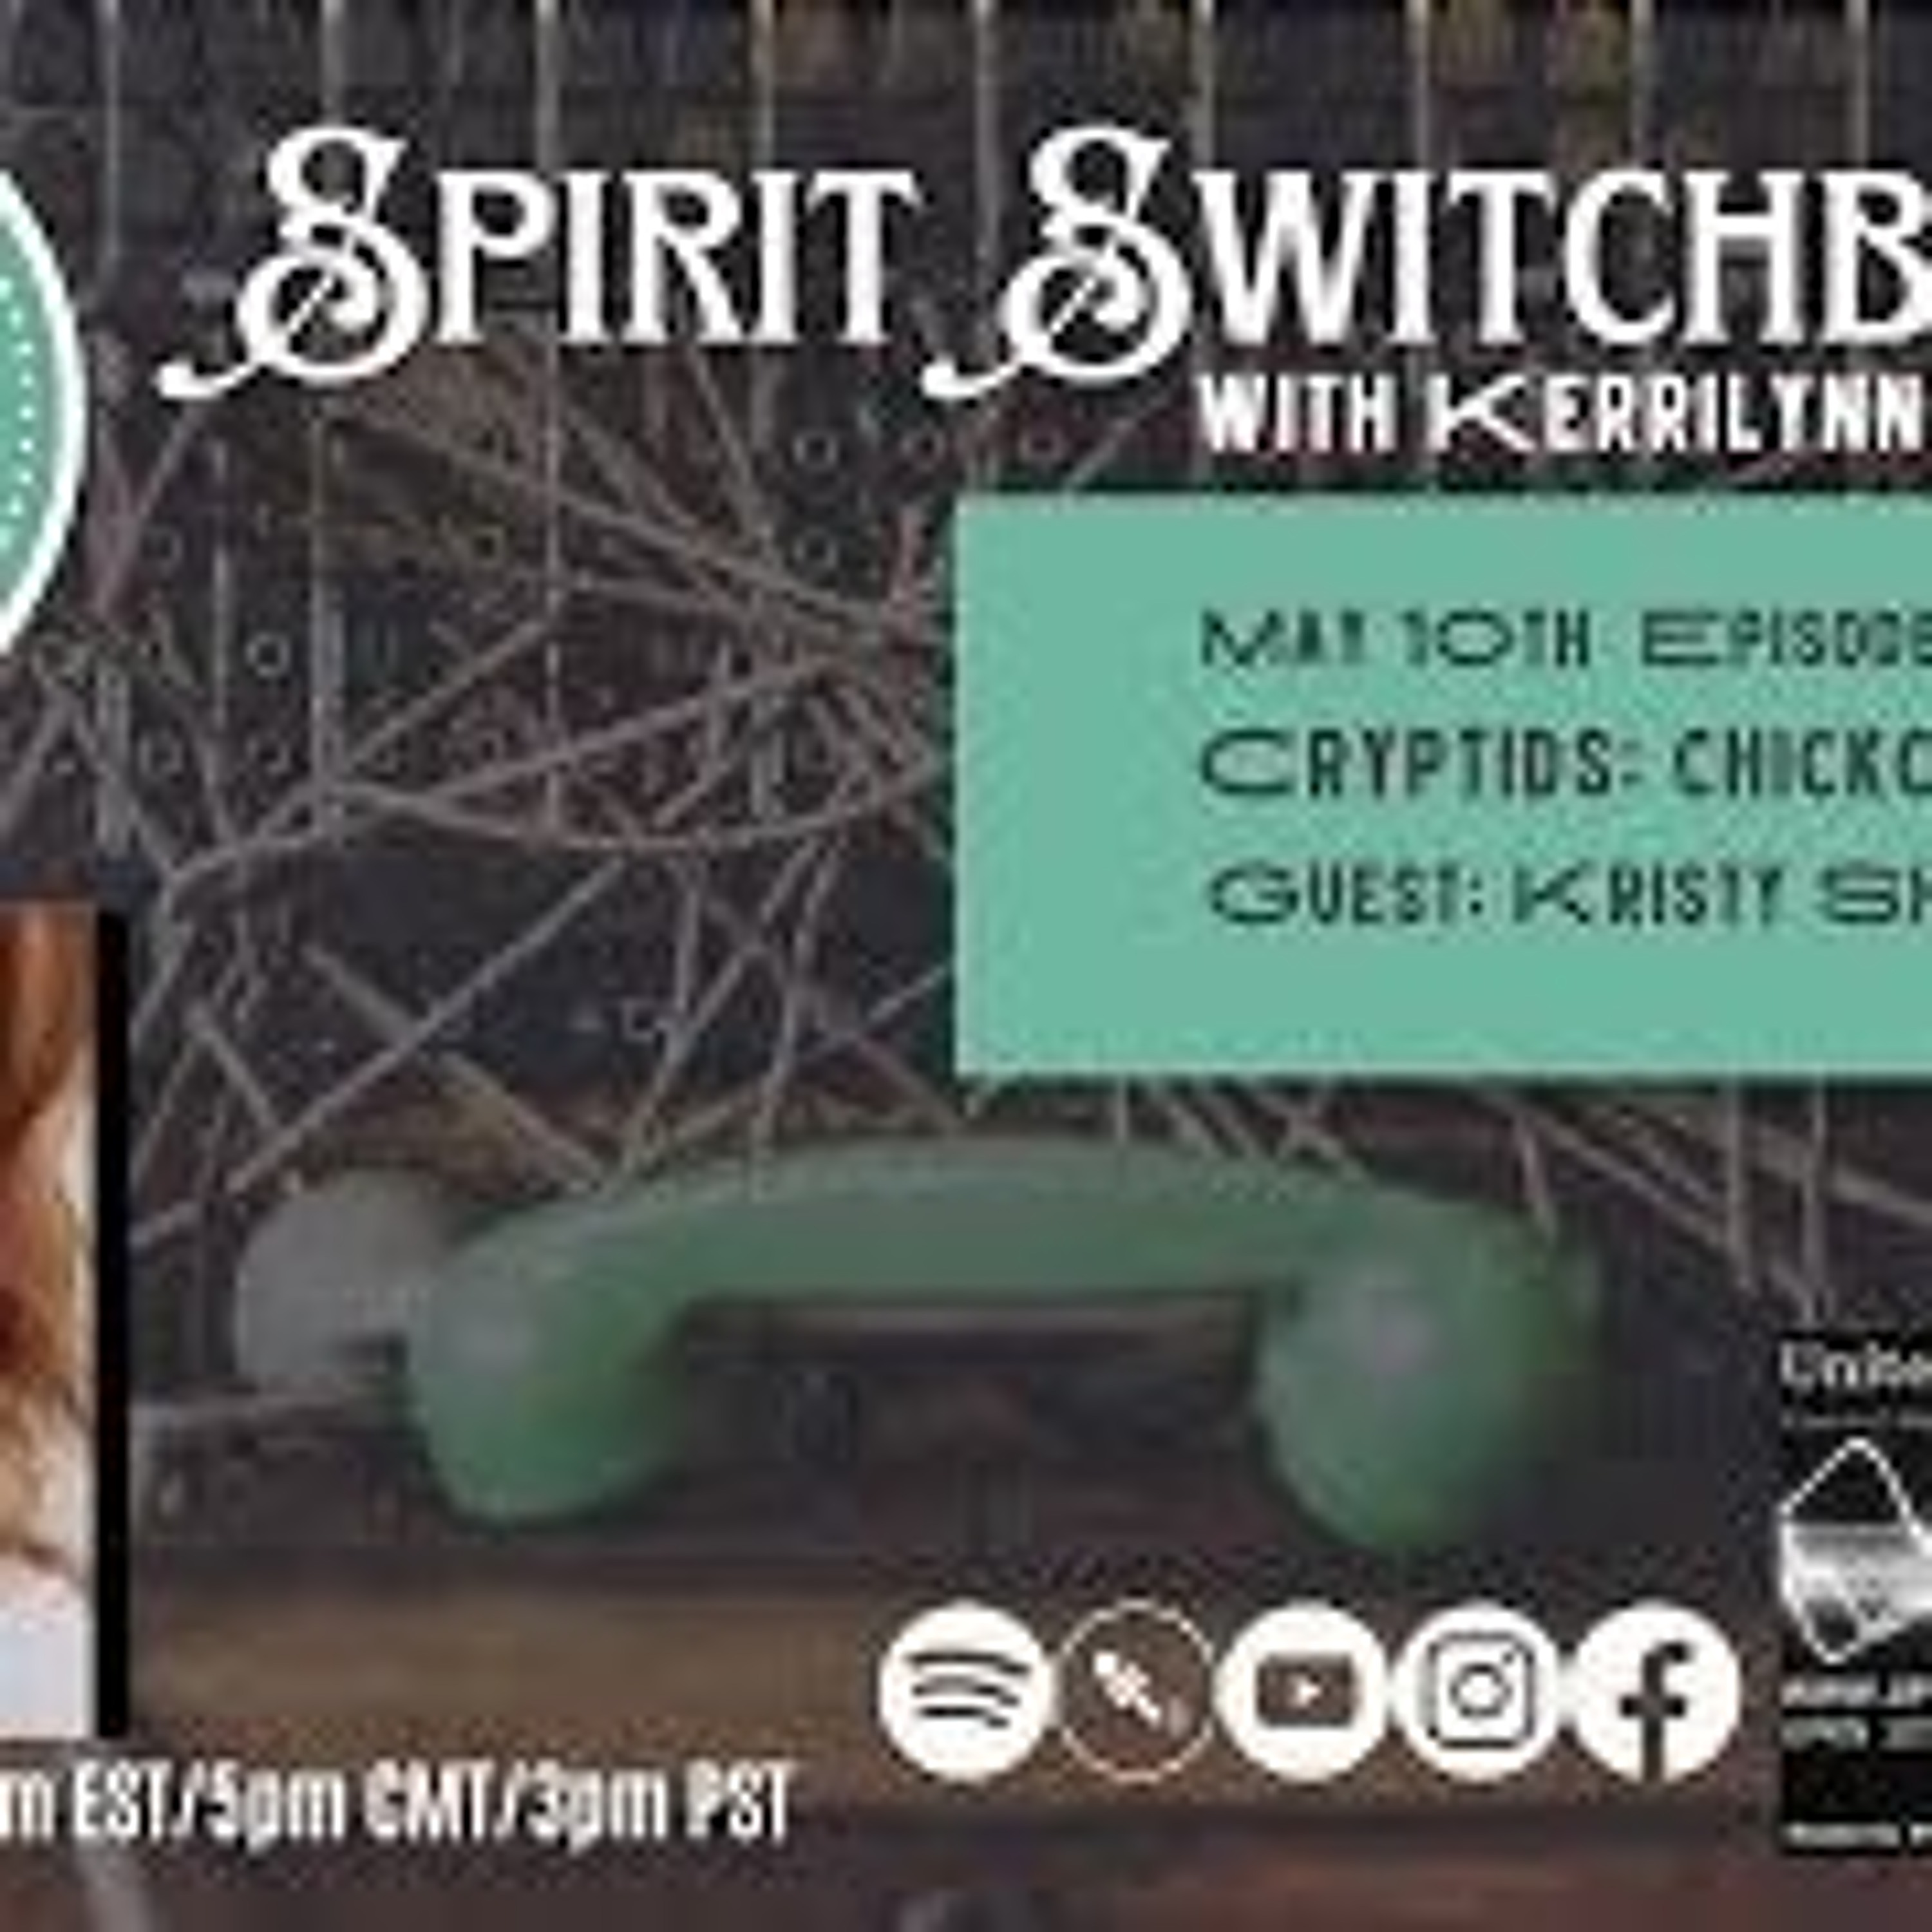 Spirit Switchboard -Kristy Shellhorn - Cryptids